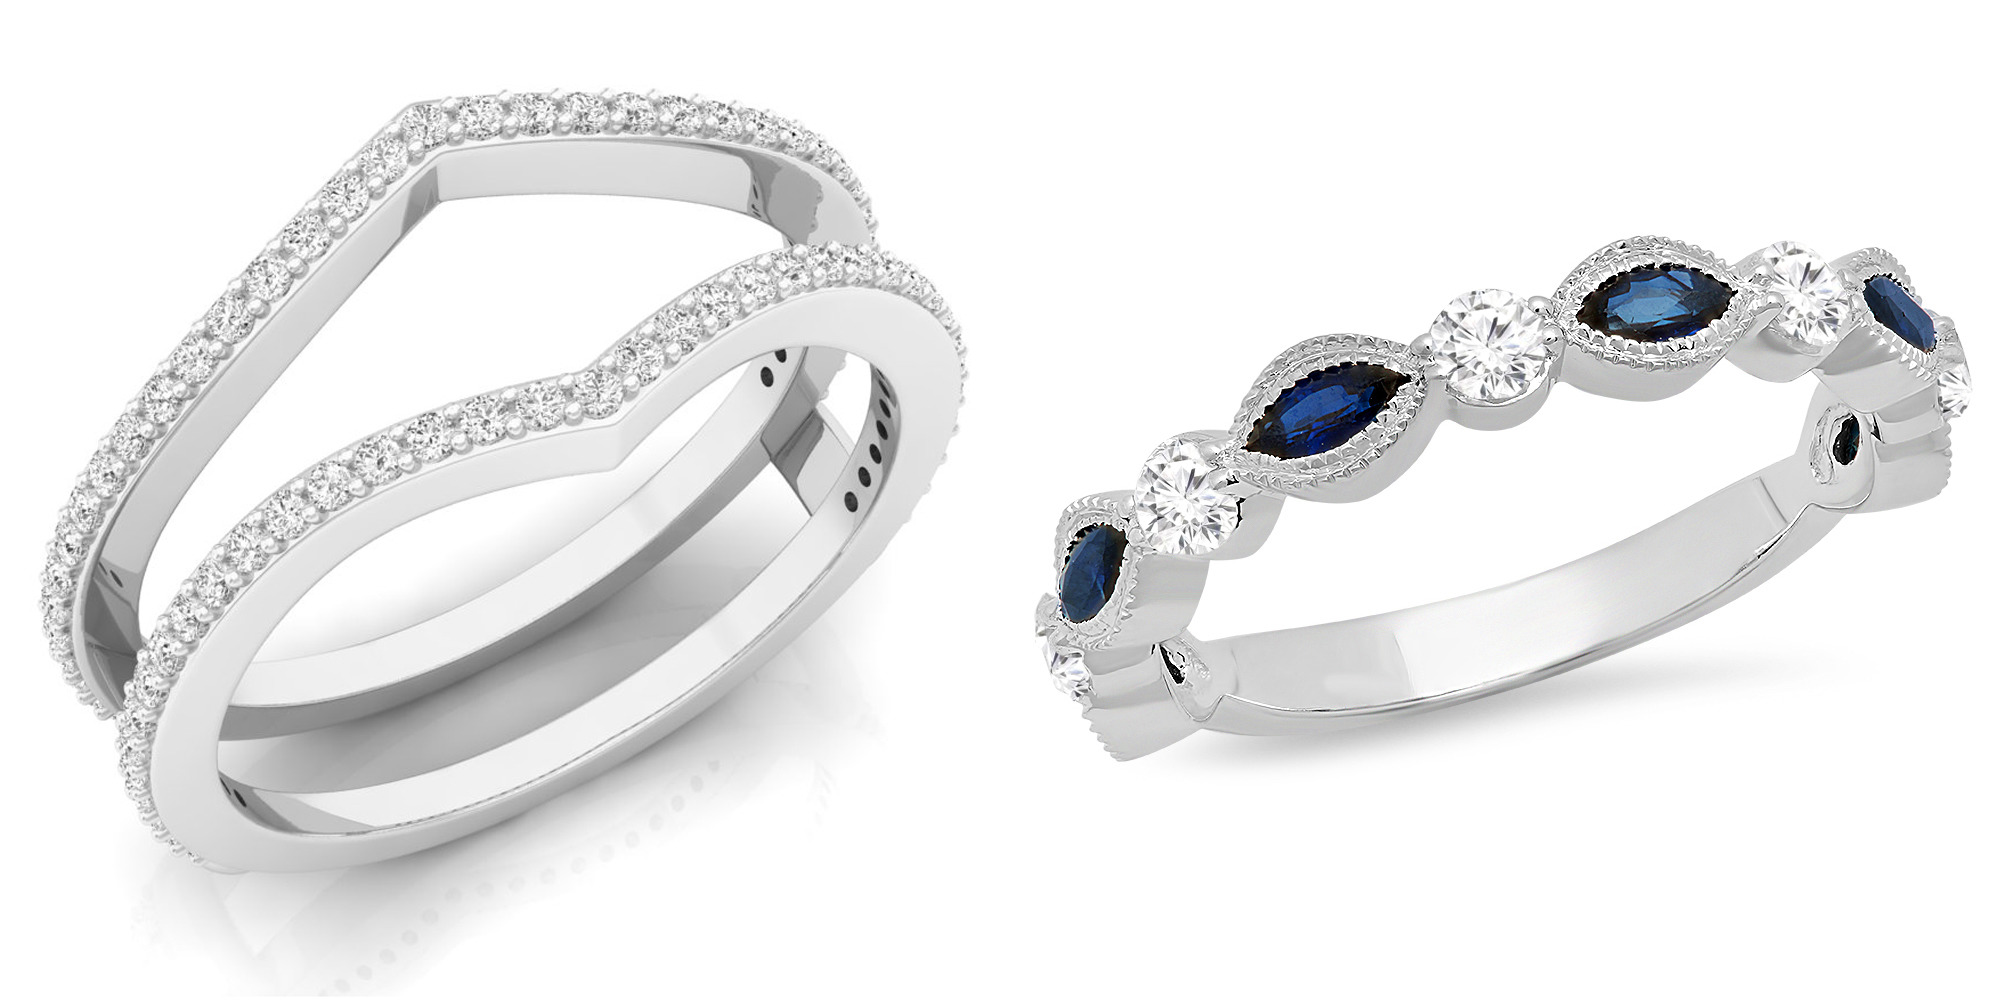 Diamond Anniversary Ring For wedding and anniversary- Dazzling Rock